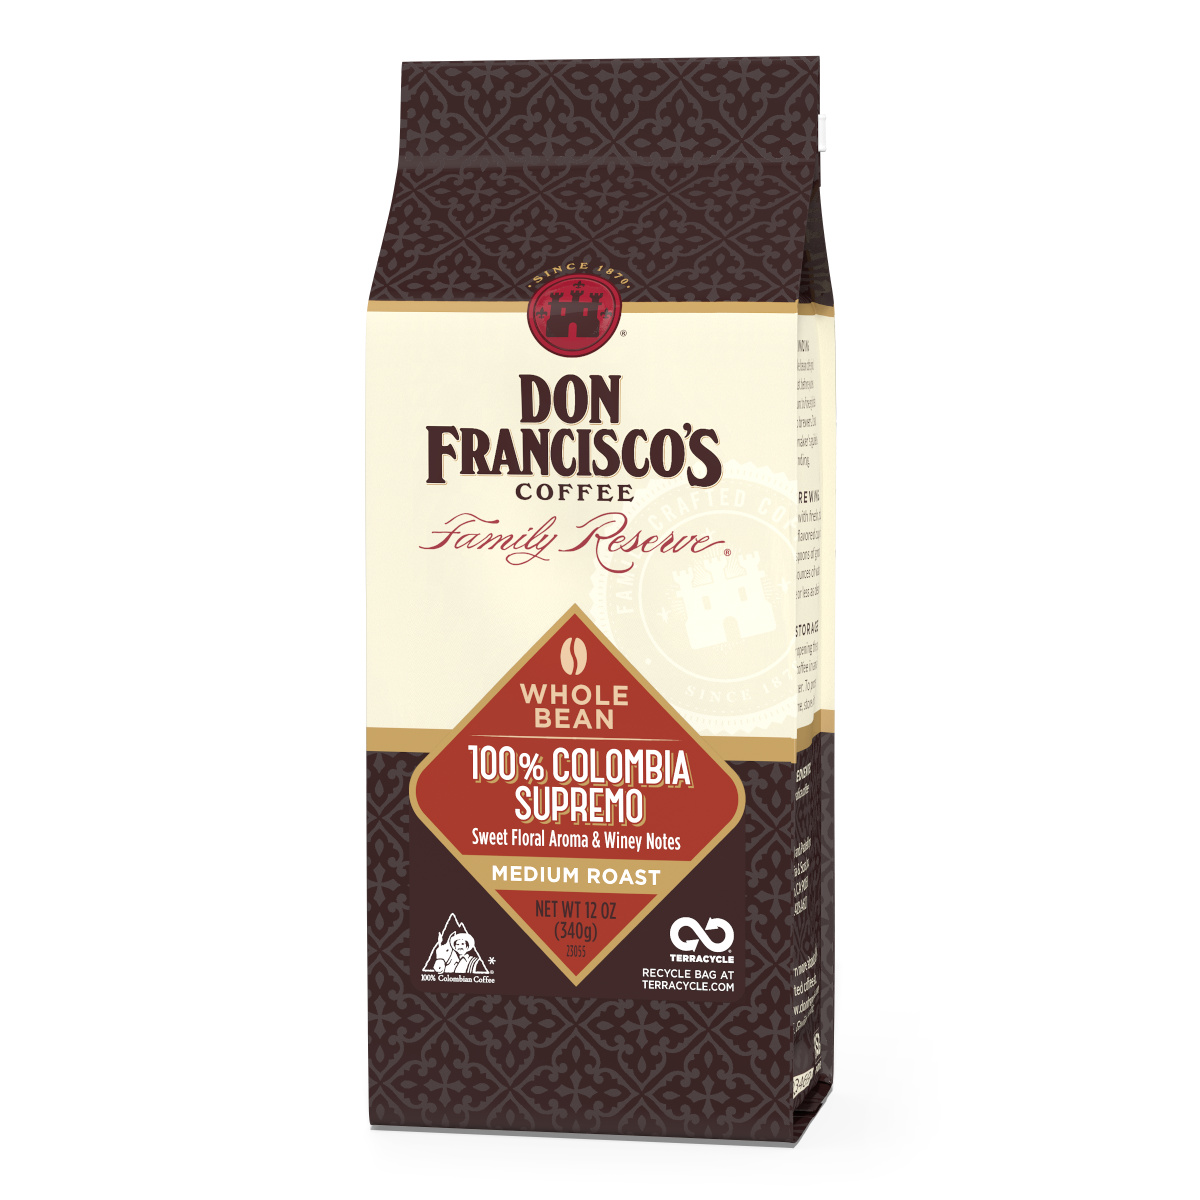 Don Francisco's 100% Colombia Supremo Whole Bean Coffee Bag - 12 oz.